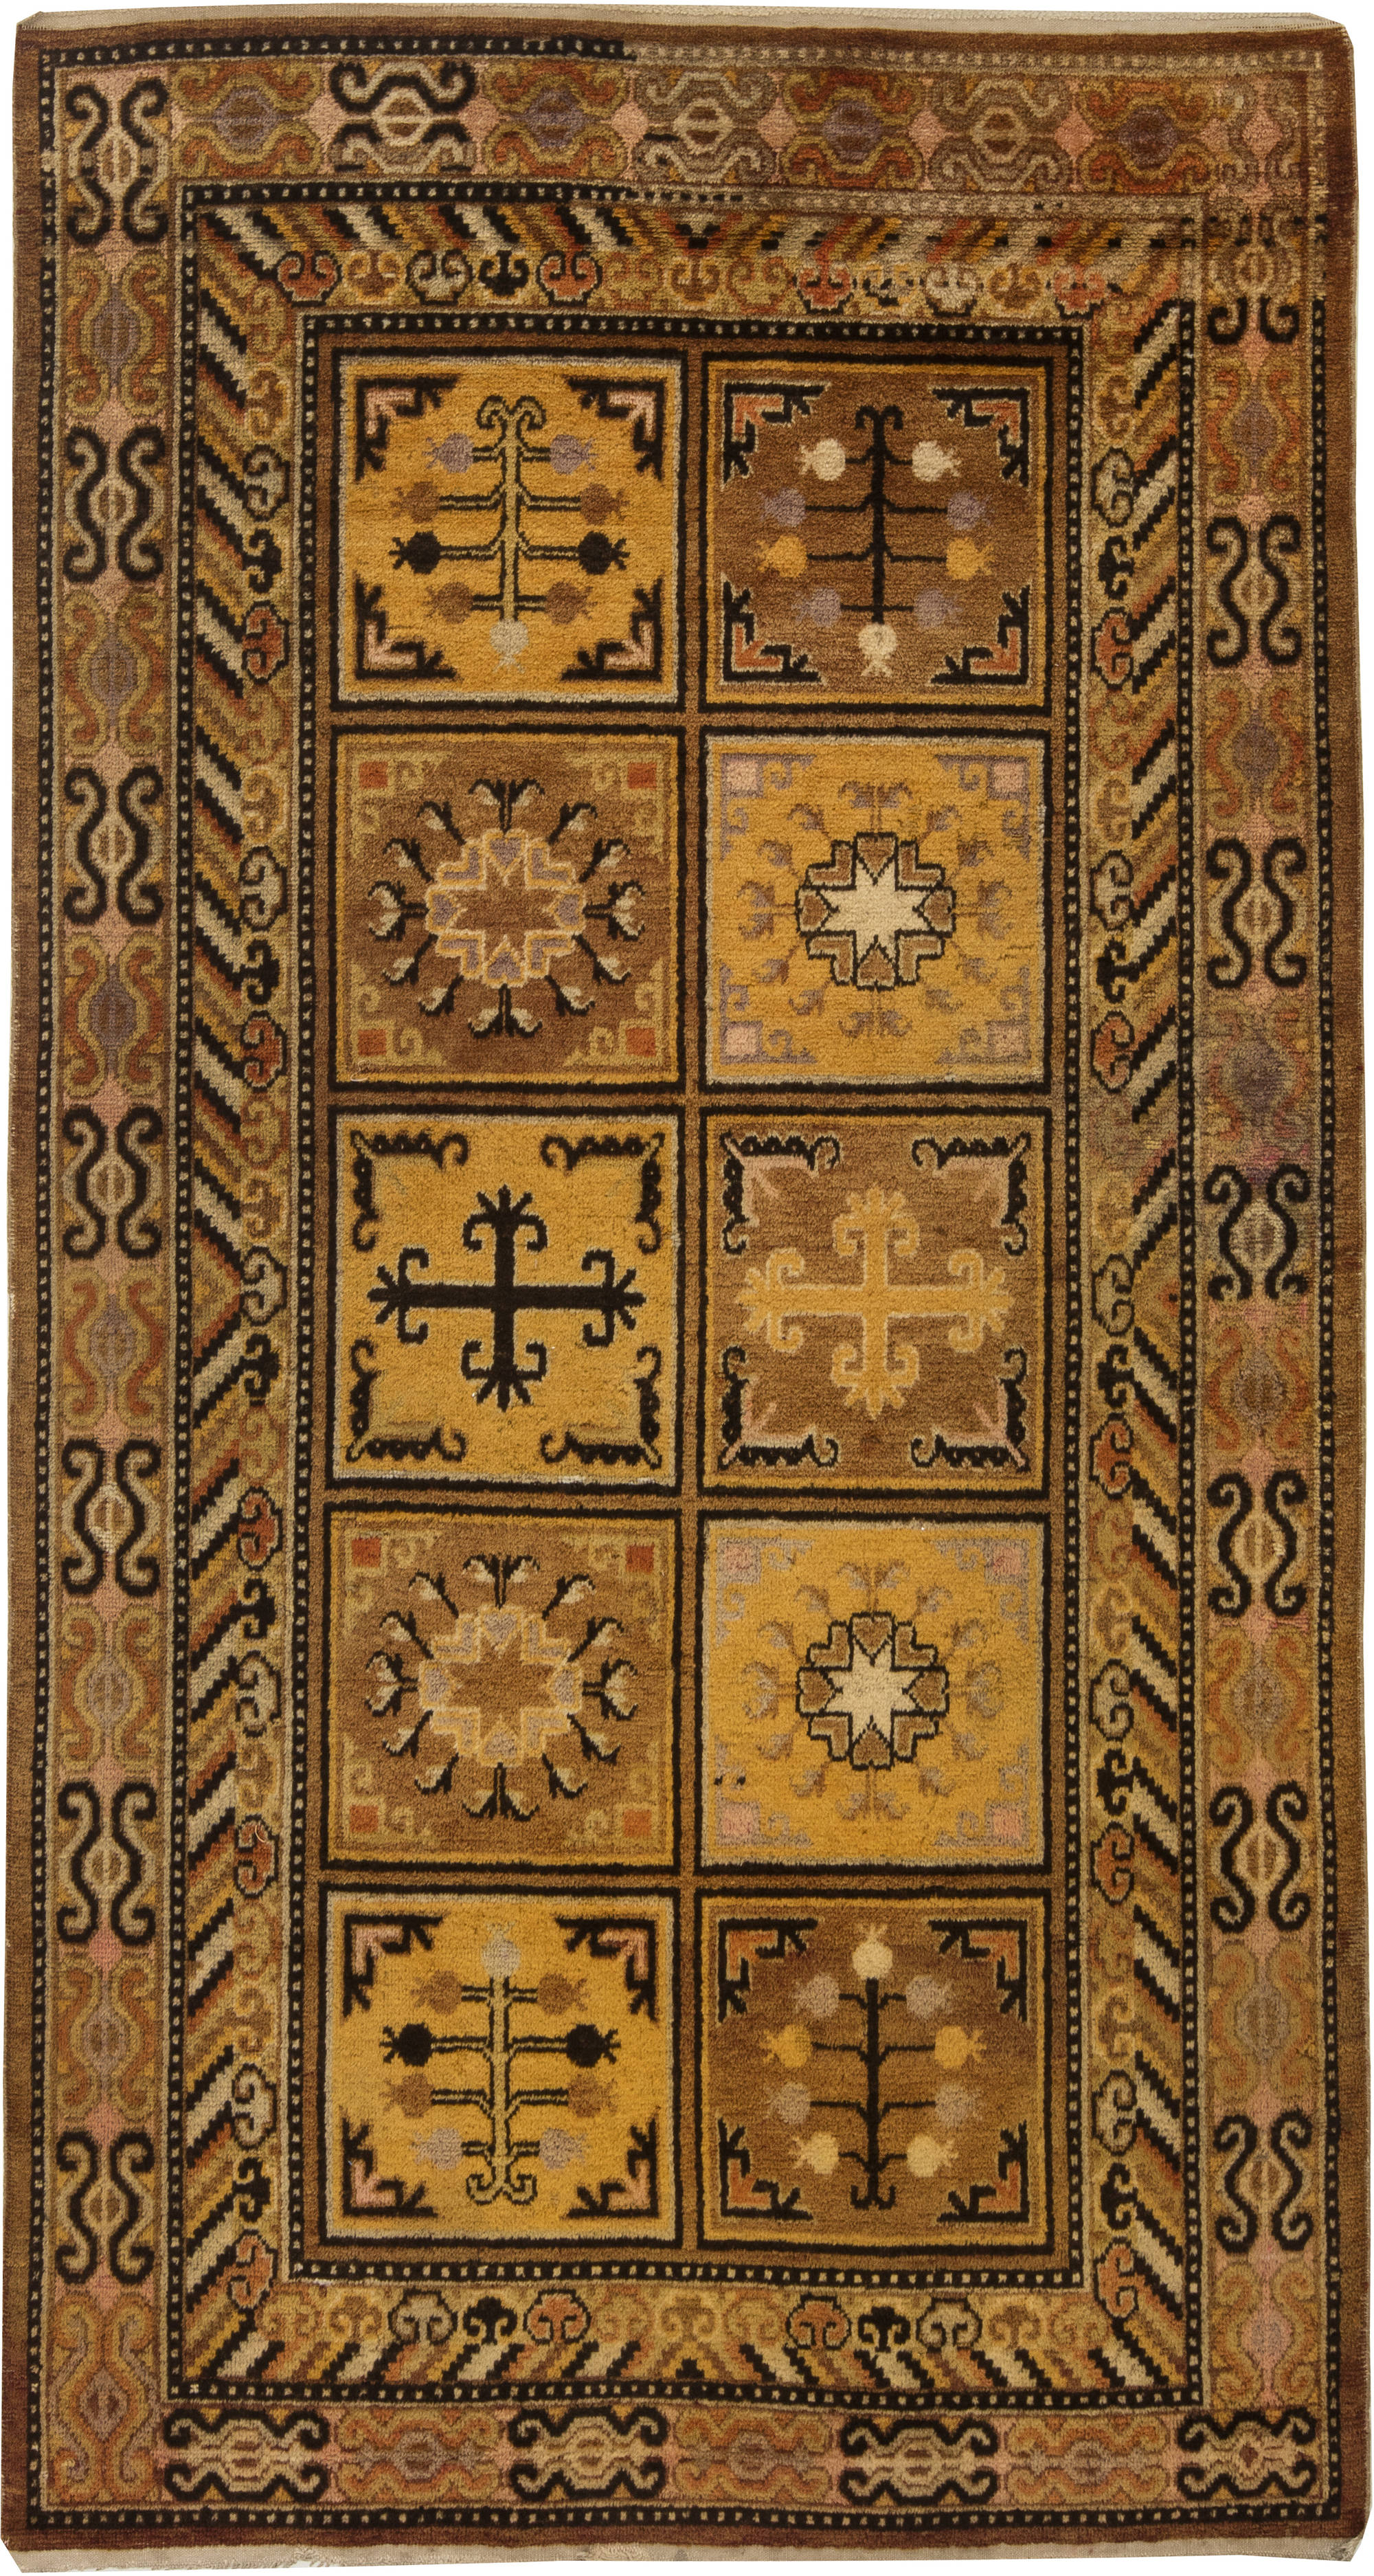 Samarkand Rugs Khotan Carpets For